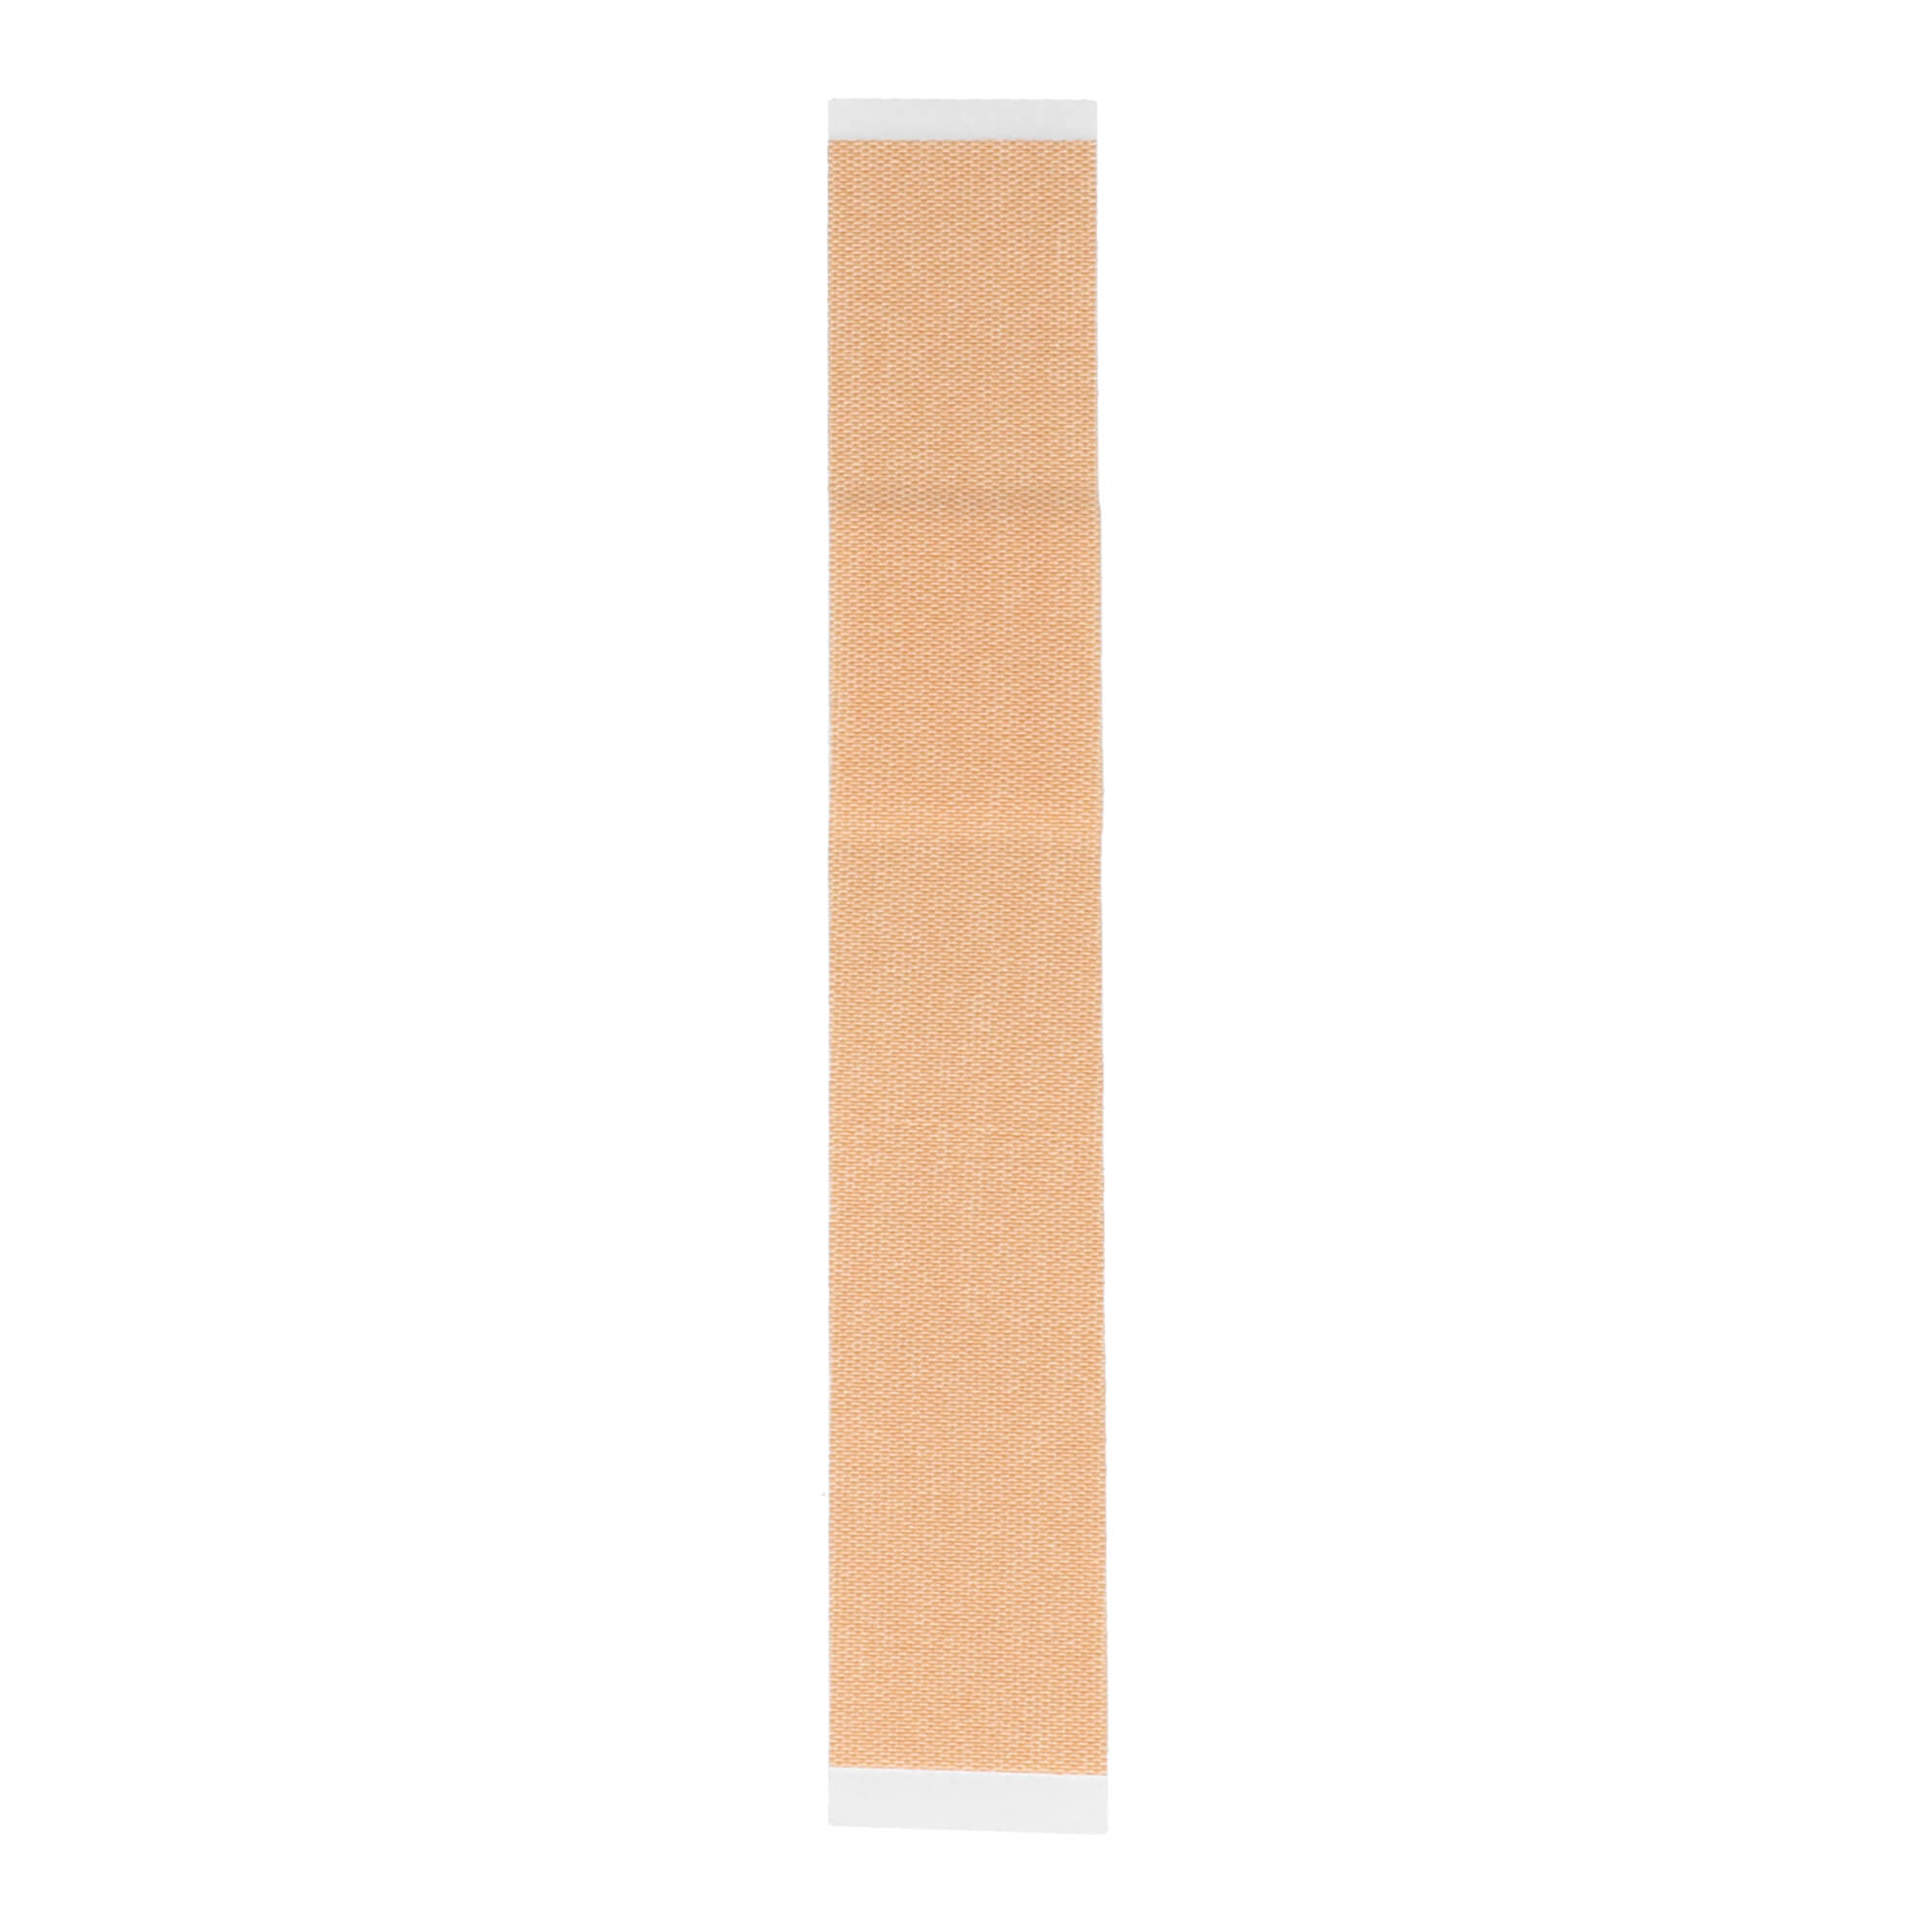 FIWA strip Fingerpflaster 2x12 cm hautfarben